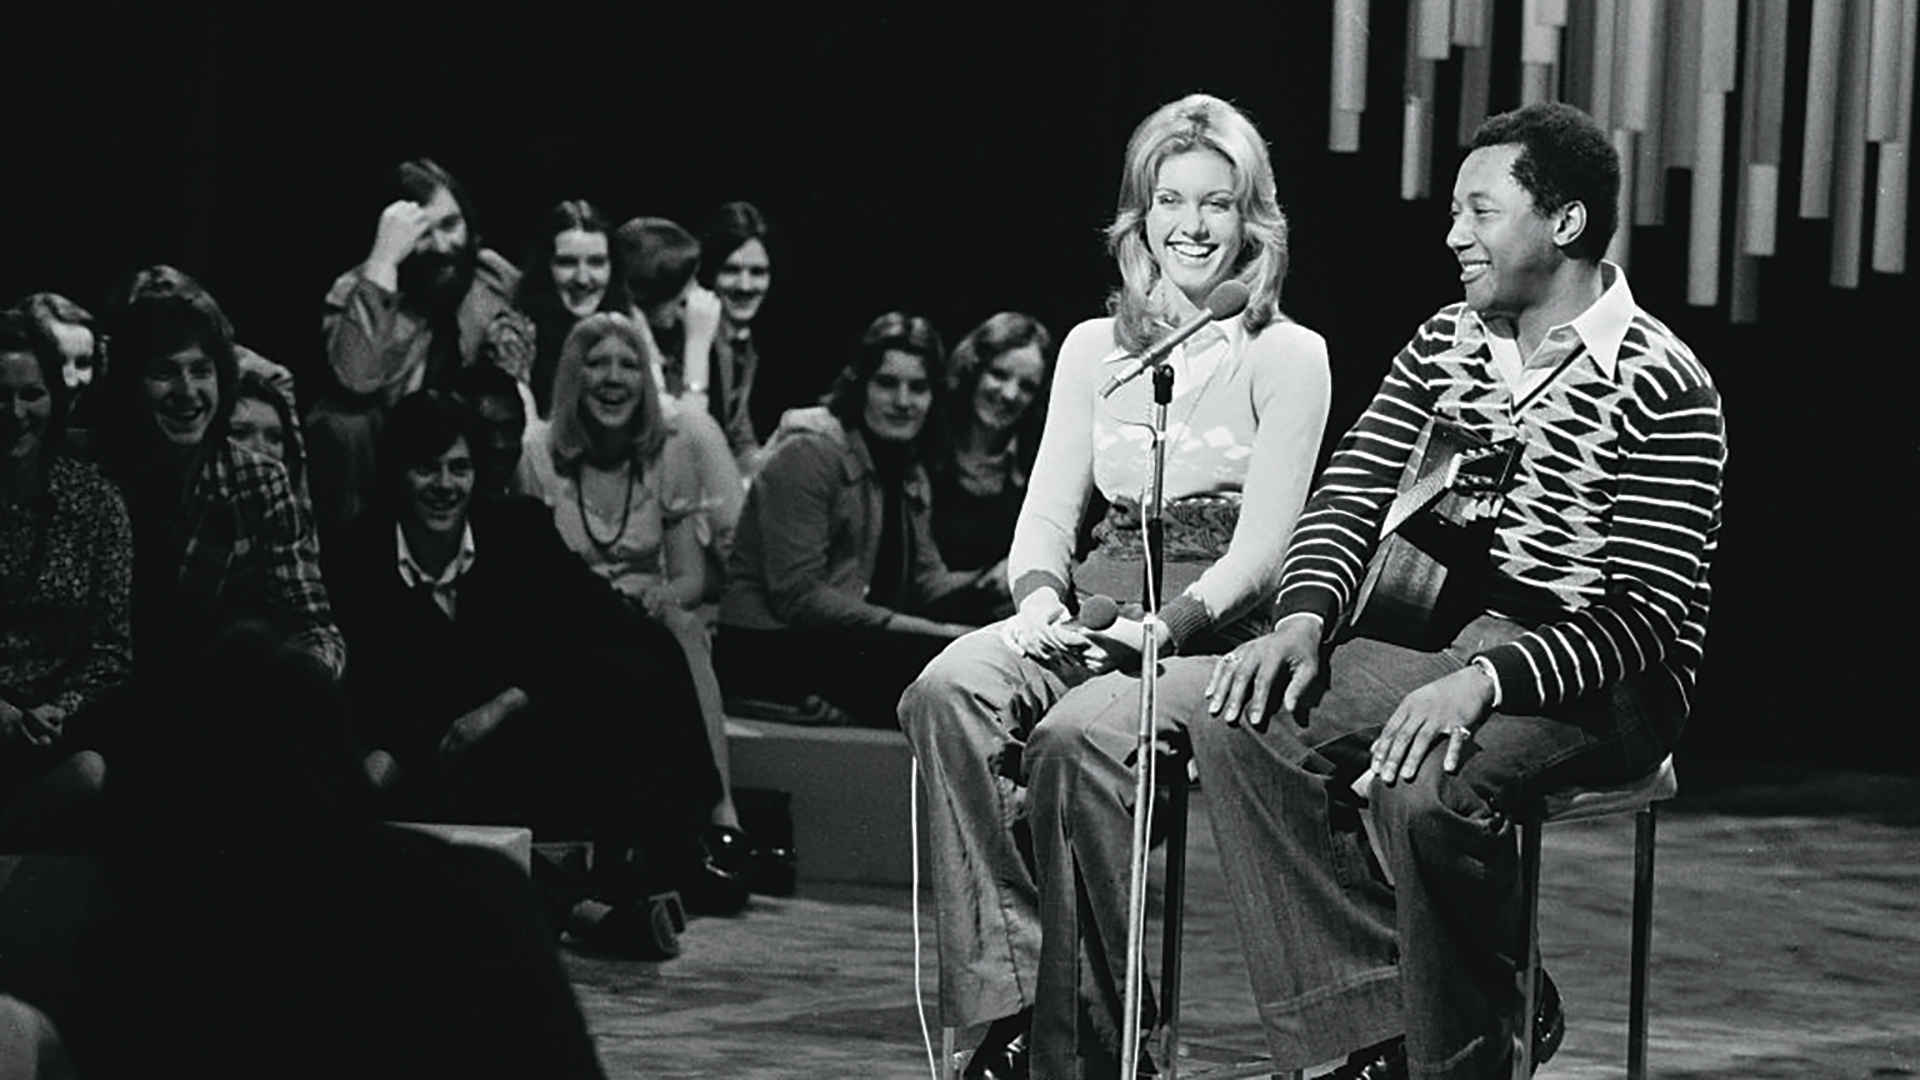 Olivia Newton-John And Labi Siffre at the BBC in 1971